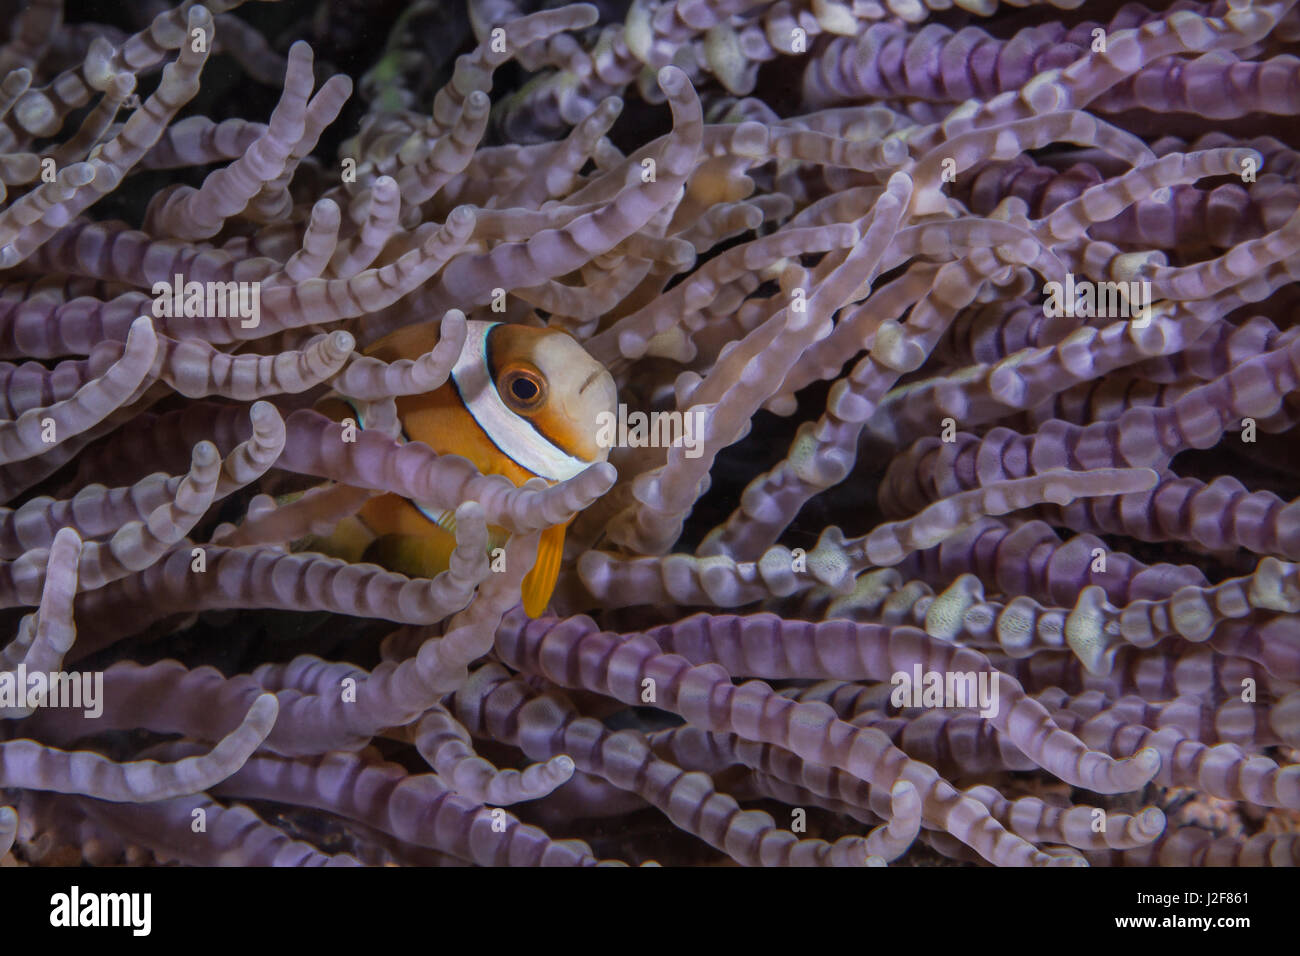 Clownfish (Amphiprion bicinctus) seeks refuge in anemone with purple beaded tentacles (Heteractis aurora) Stock Photo